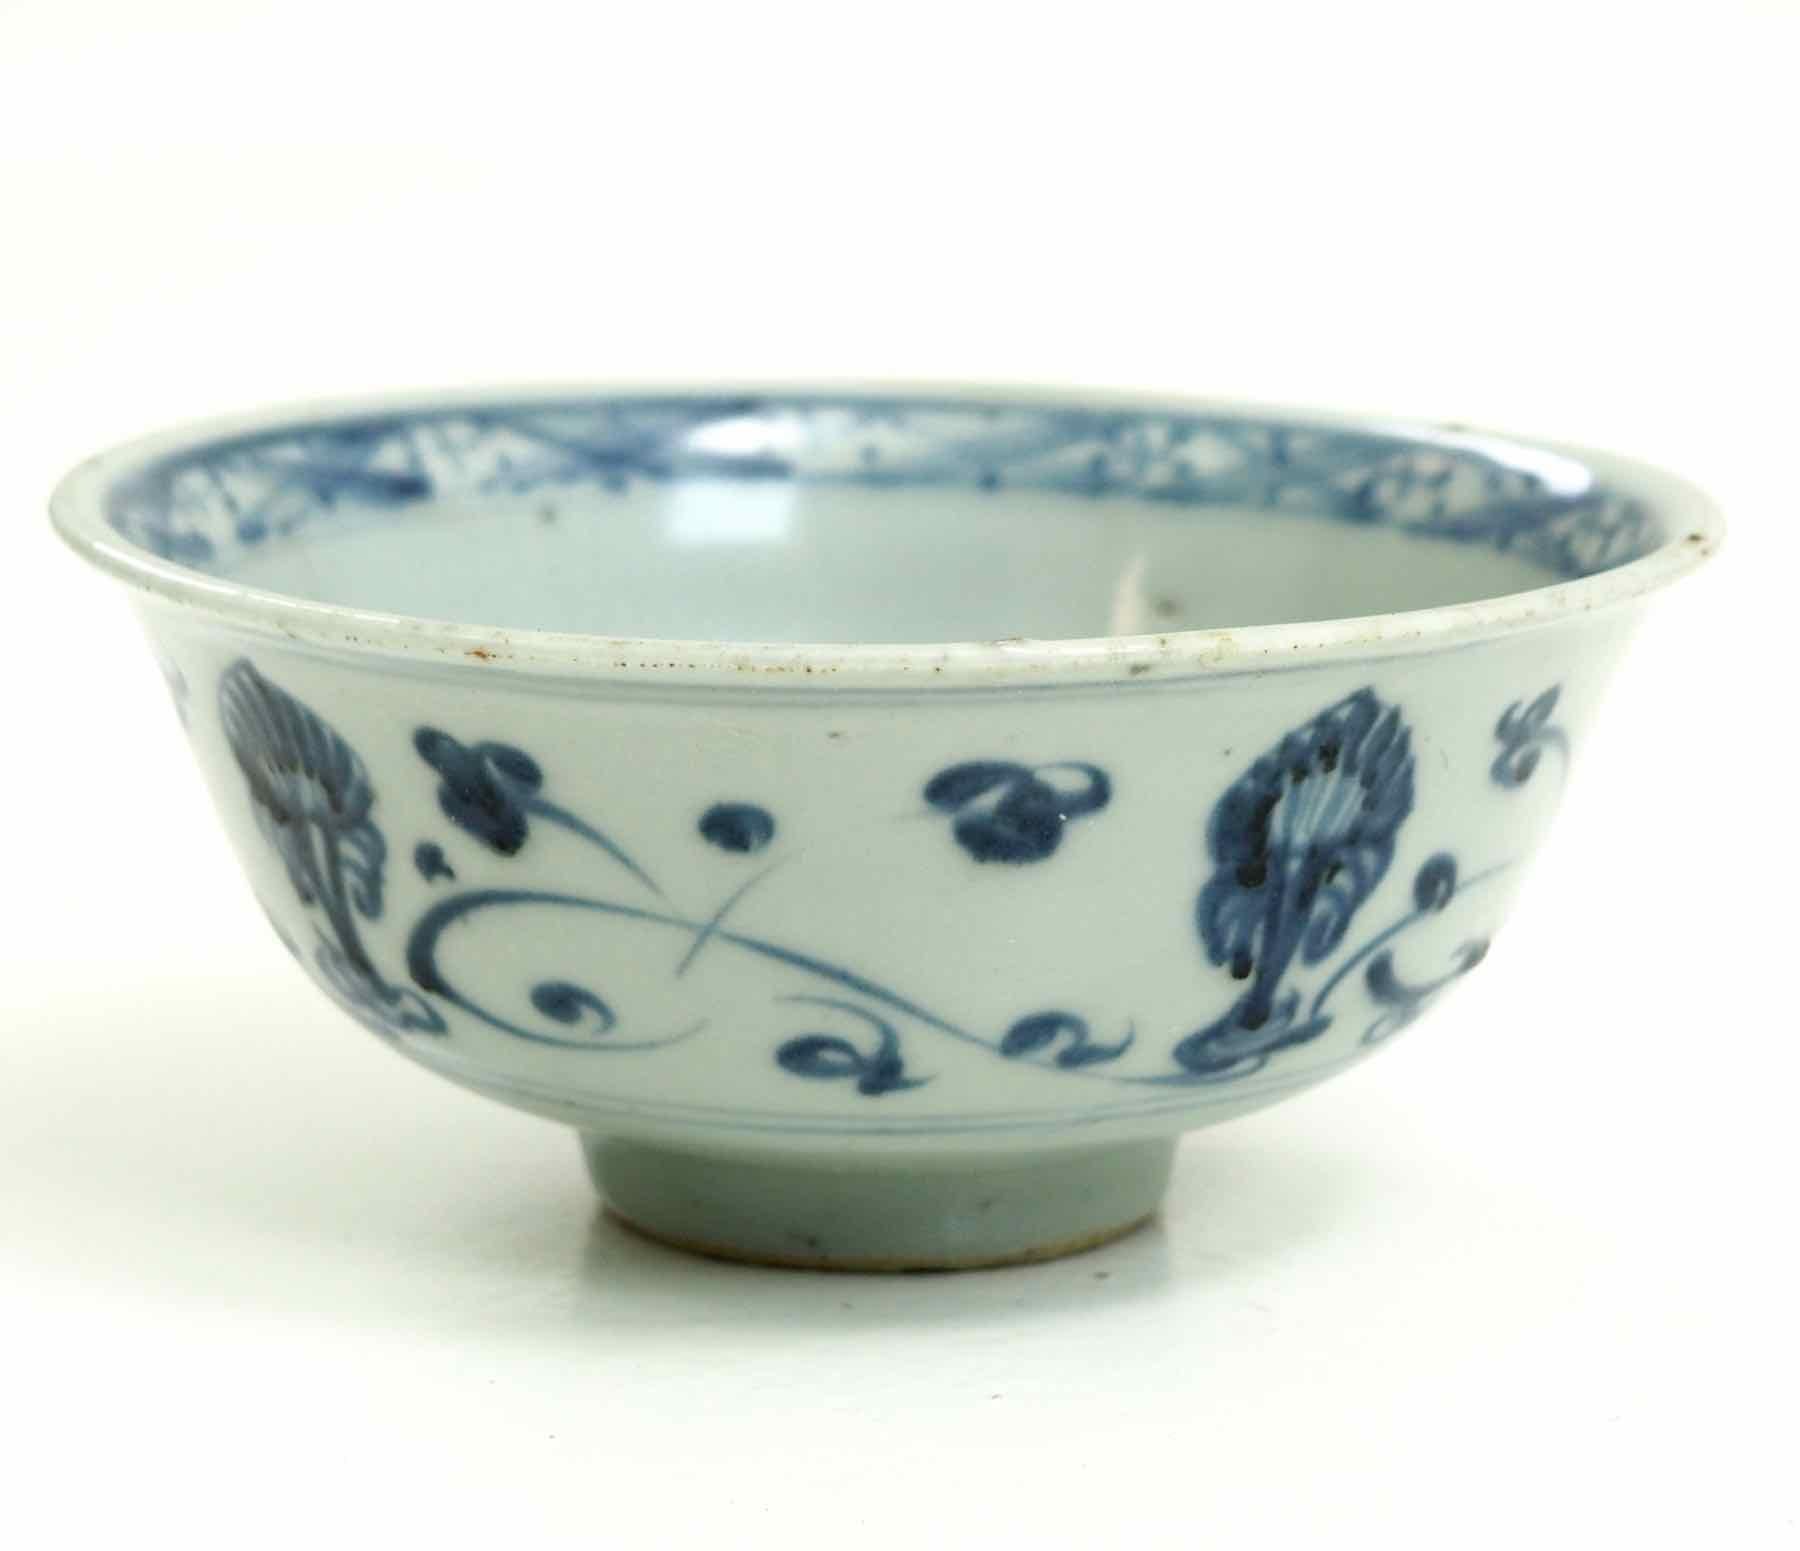 18th century, Chinese bowl
Measures: Height 6, diameter 15 cm 
Height 2.3, diameter 5.9 in.